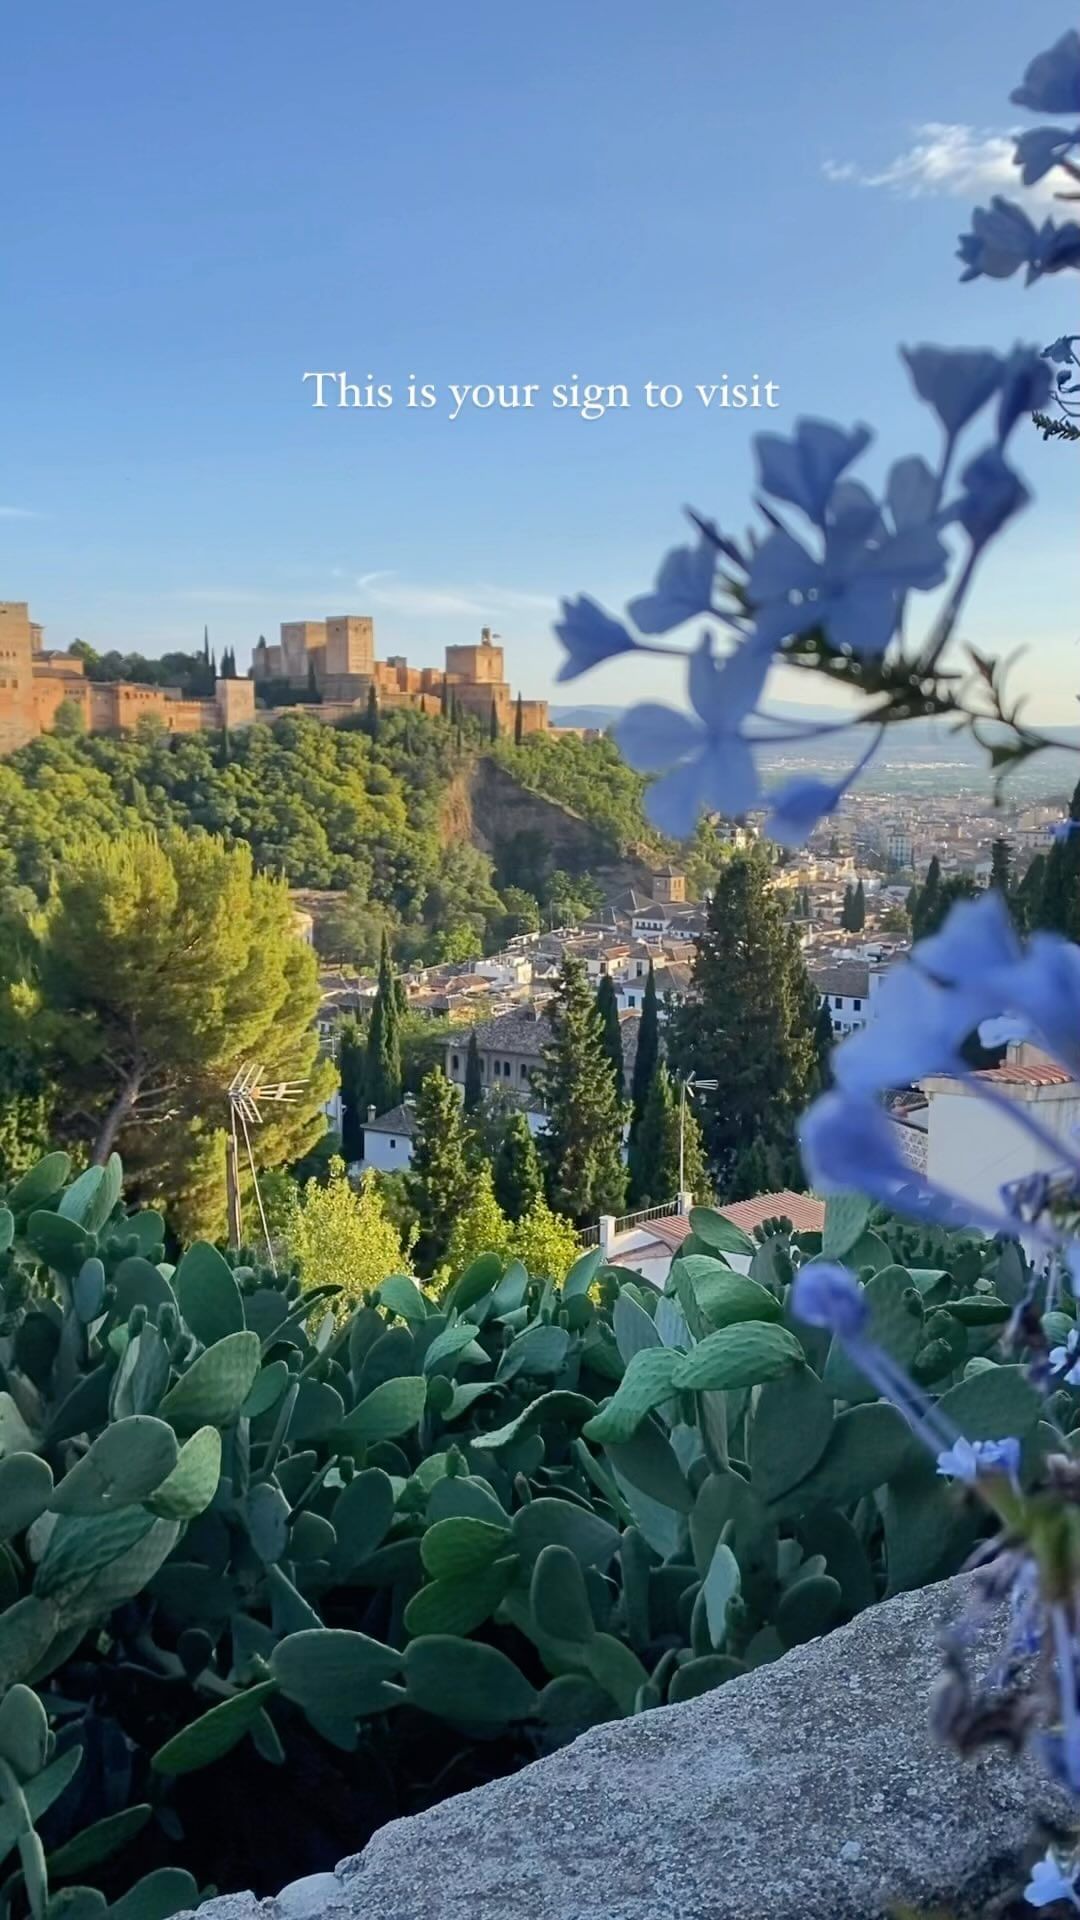 Islamic Heritage and Nature in Granada